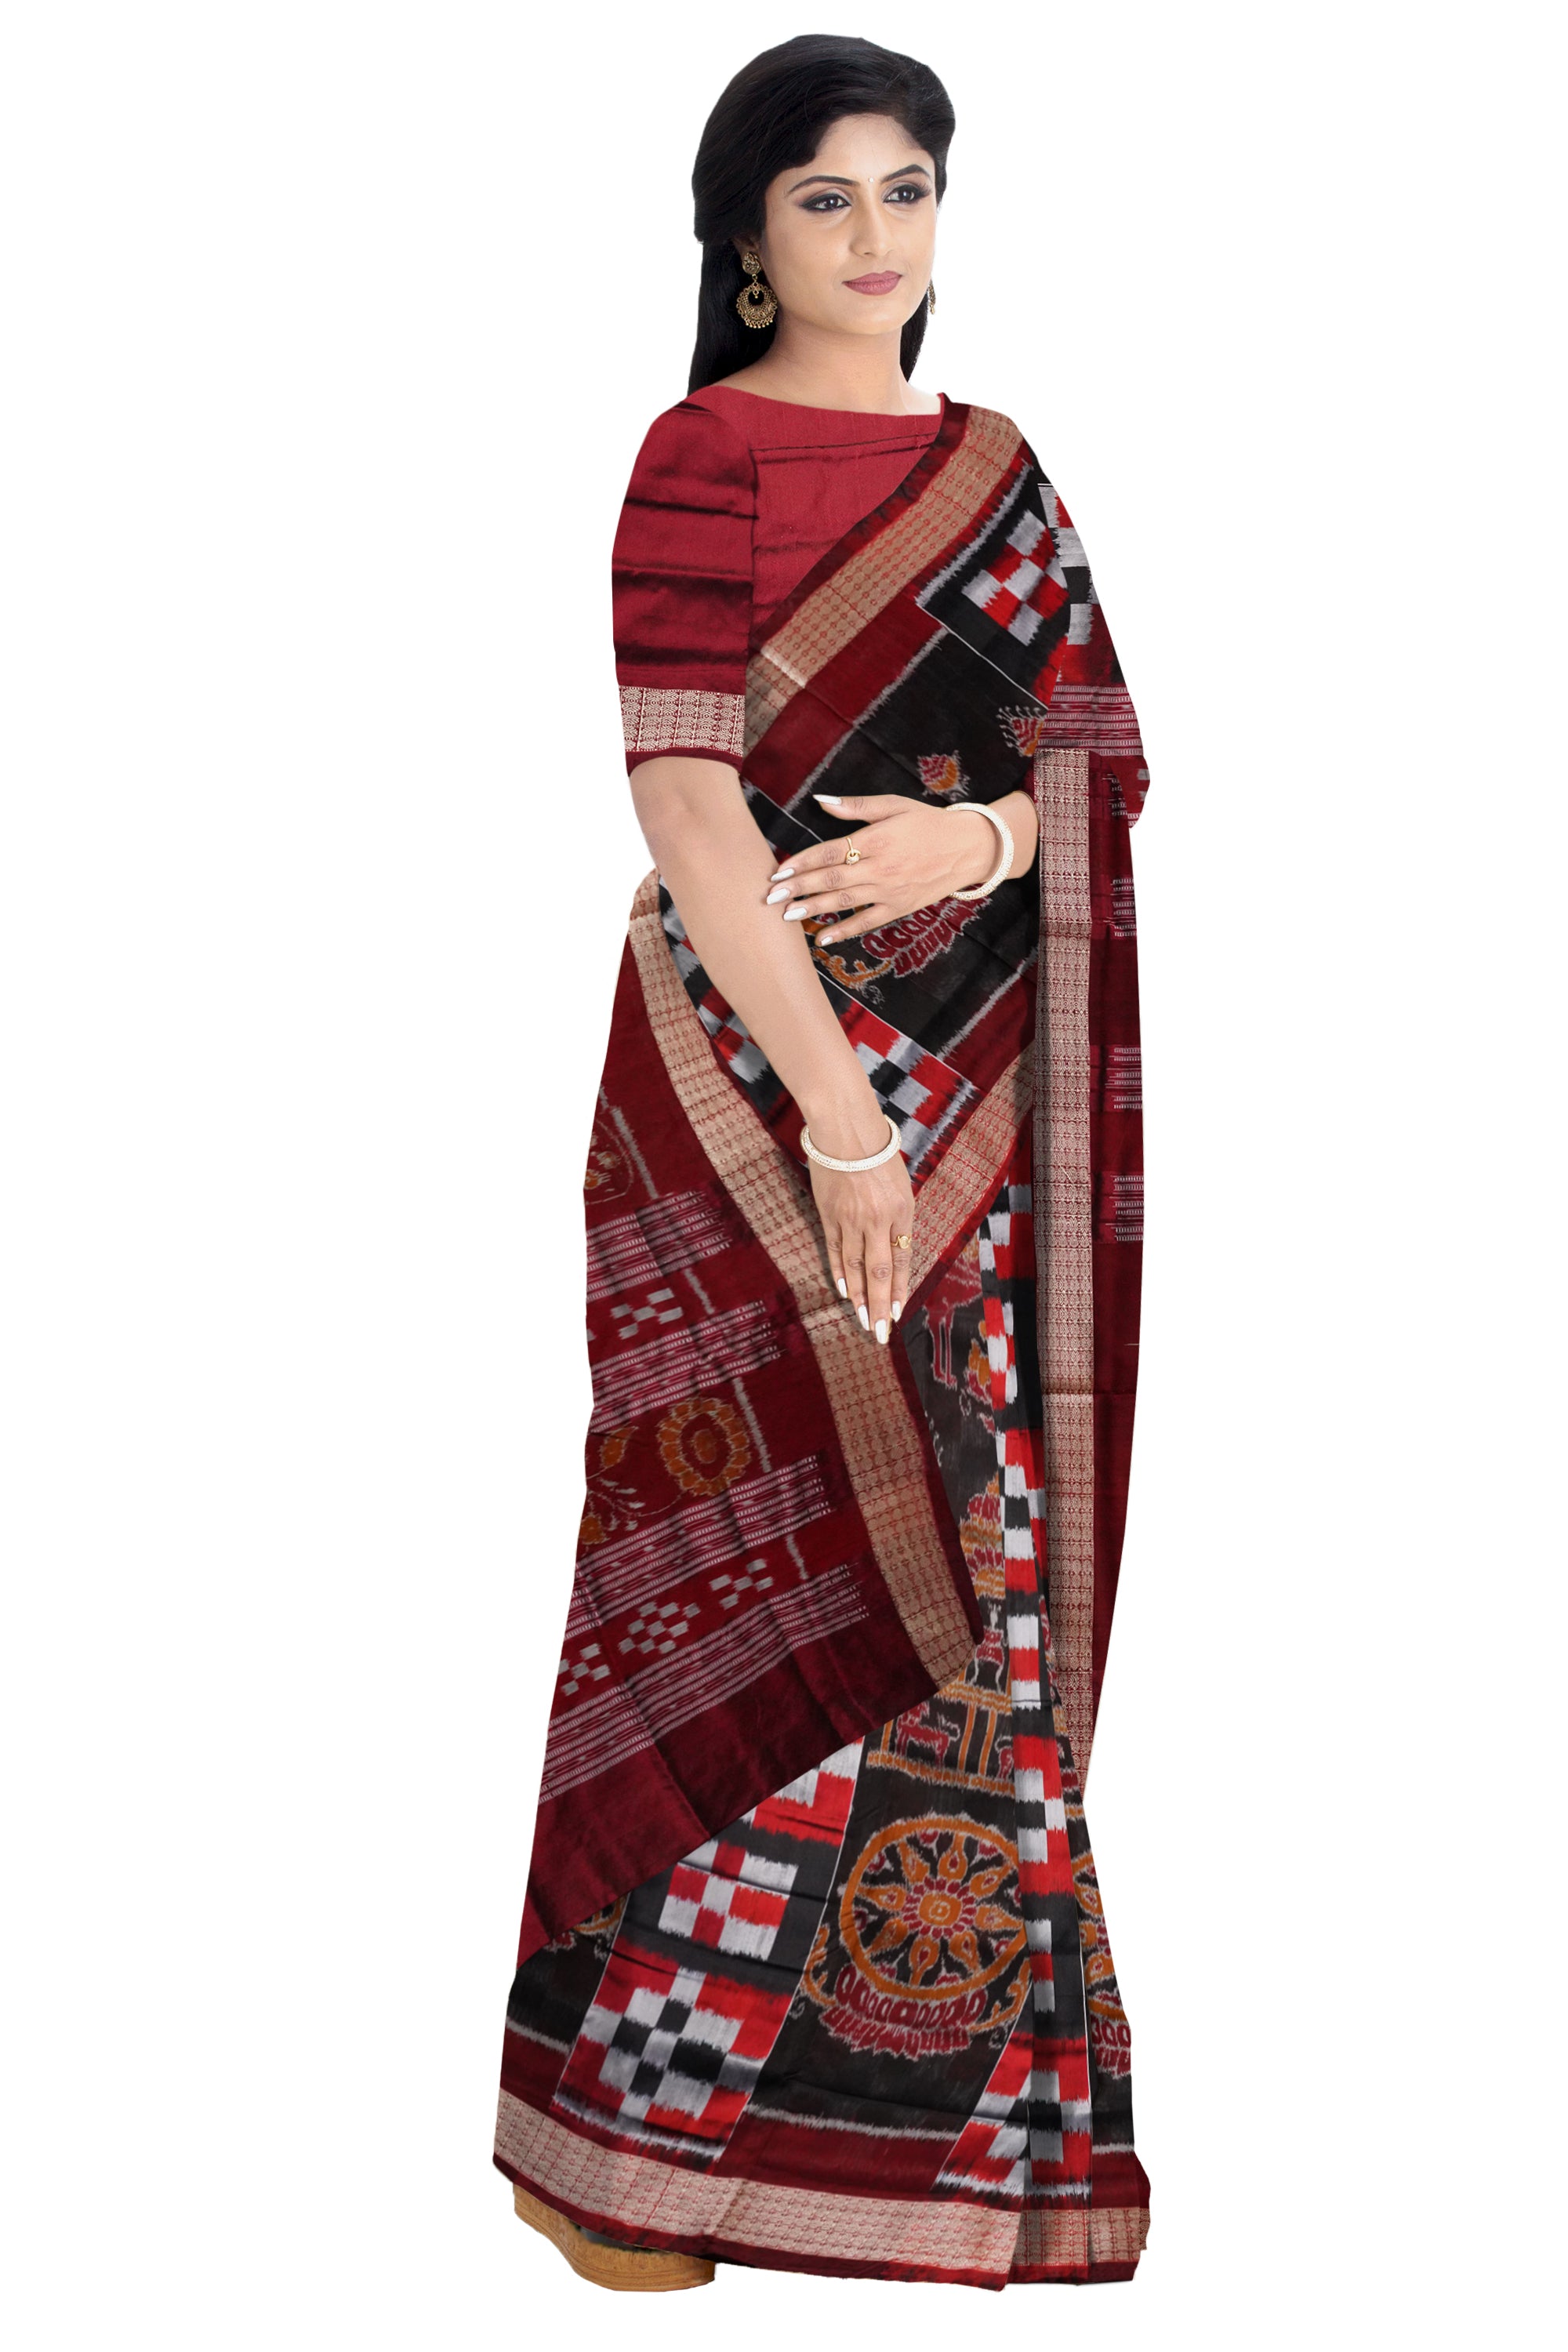 Konarka with Pasapali pattern Sambalpuri pata saree in Black,Maroon and Coffee color. - Koshali Arts & Crafts Enterprise